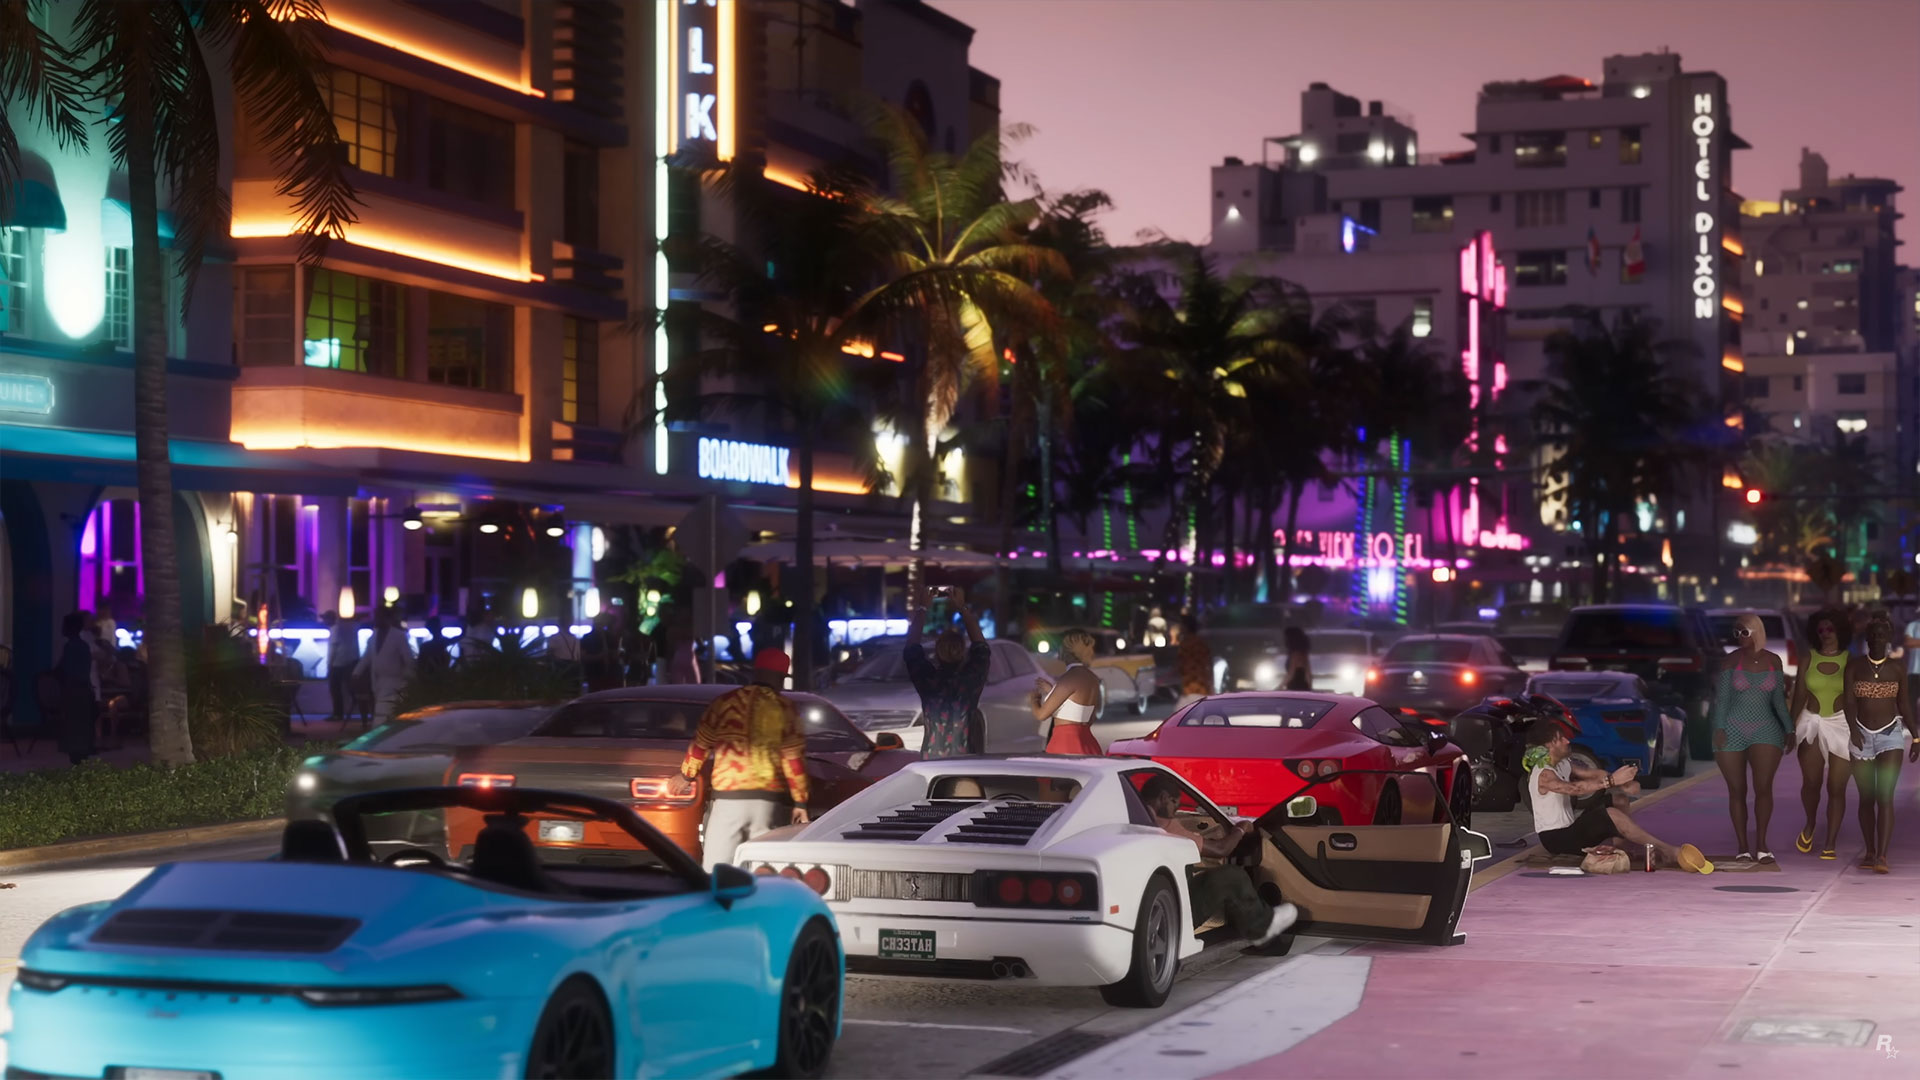 Grand Theft Auto VI's debut trailer has already garnered over 150 million views